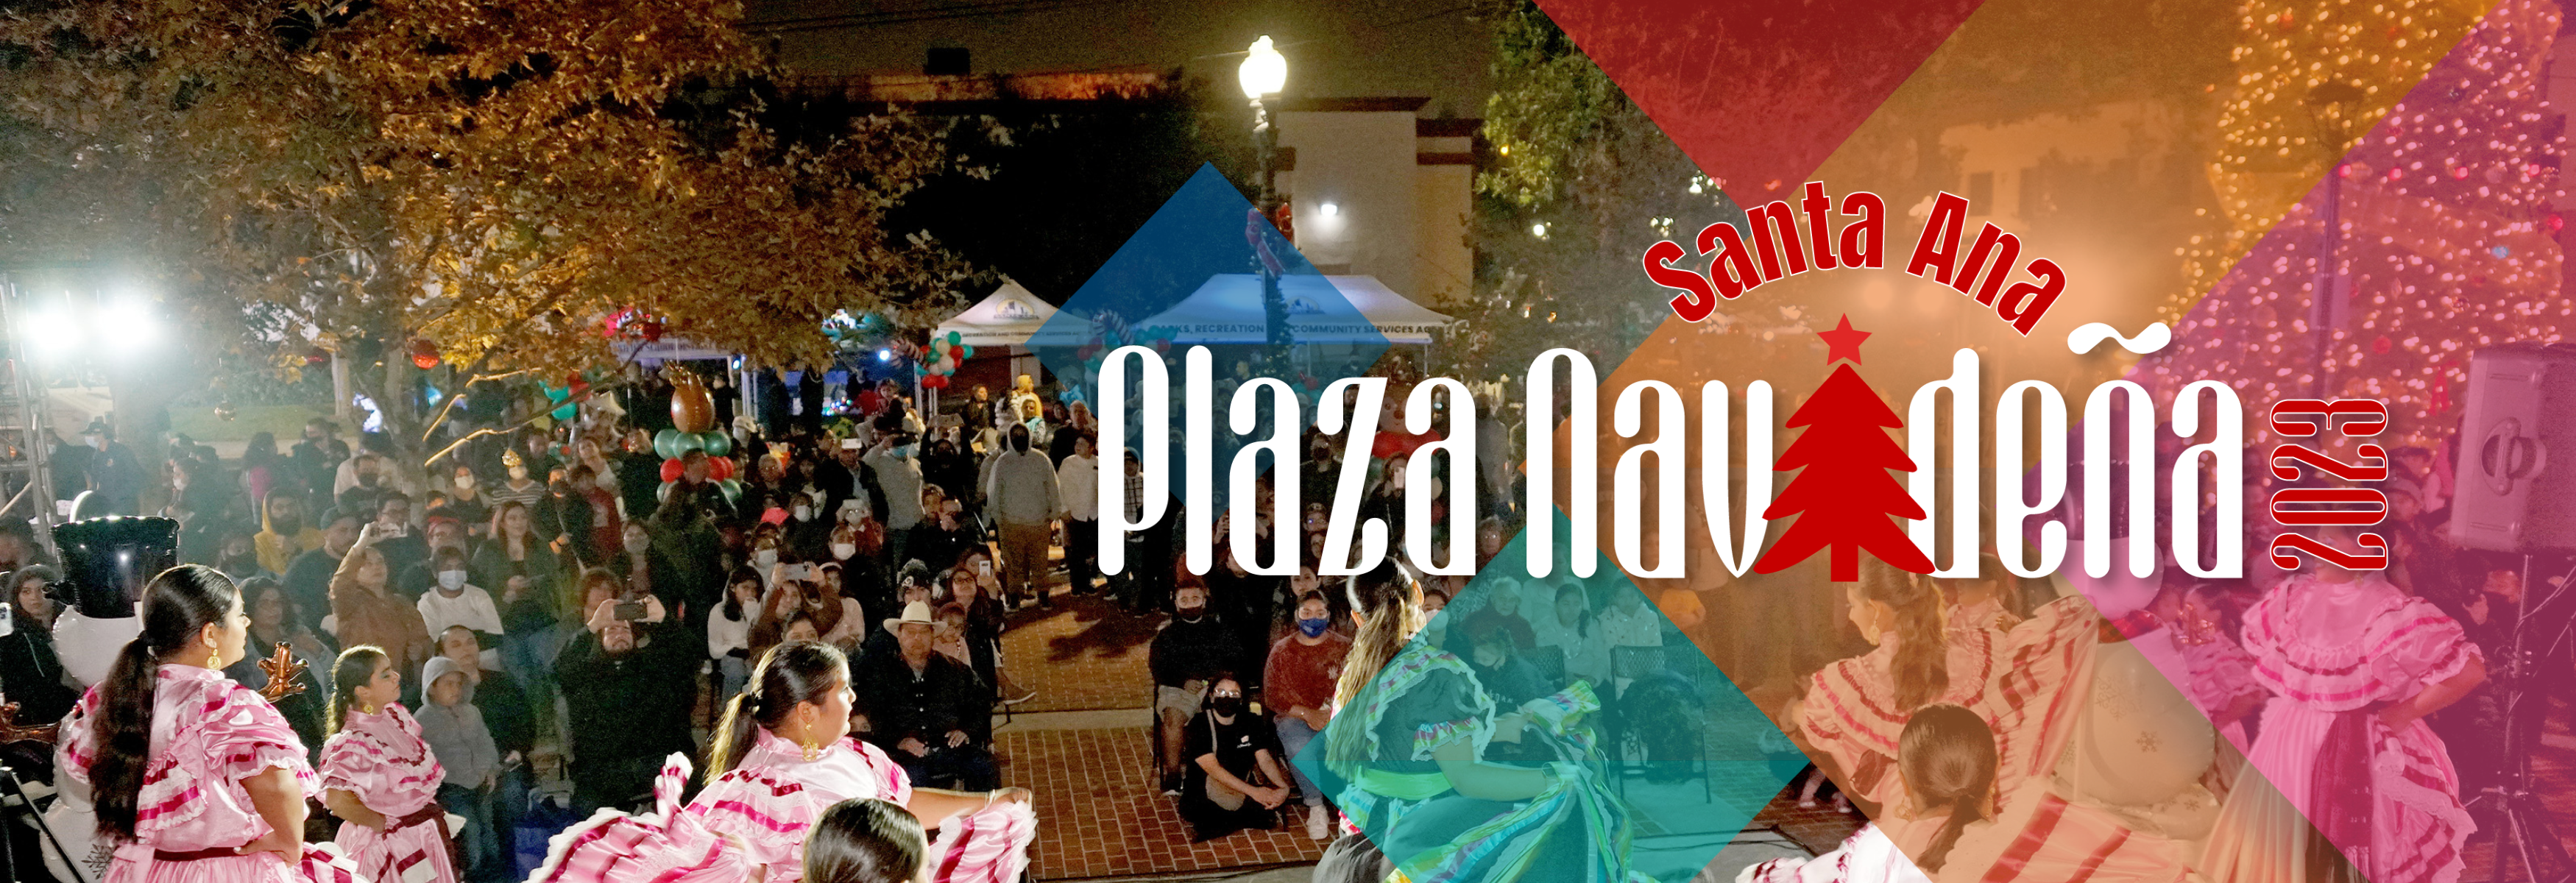 Plaza Navideña with lit up tree and baile folkroico dancers